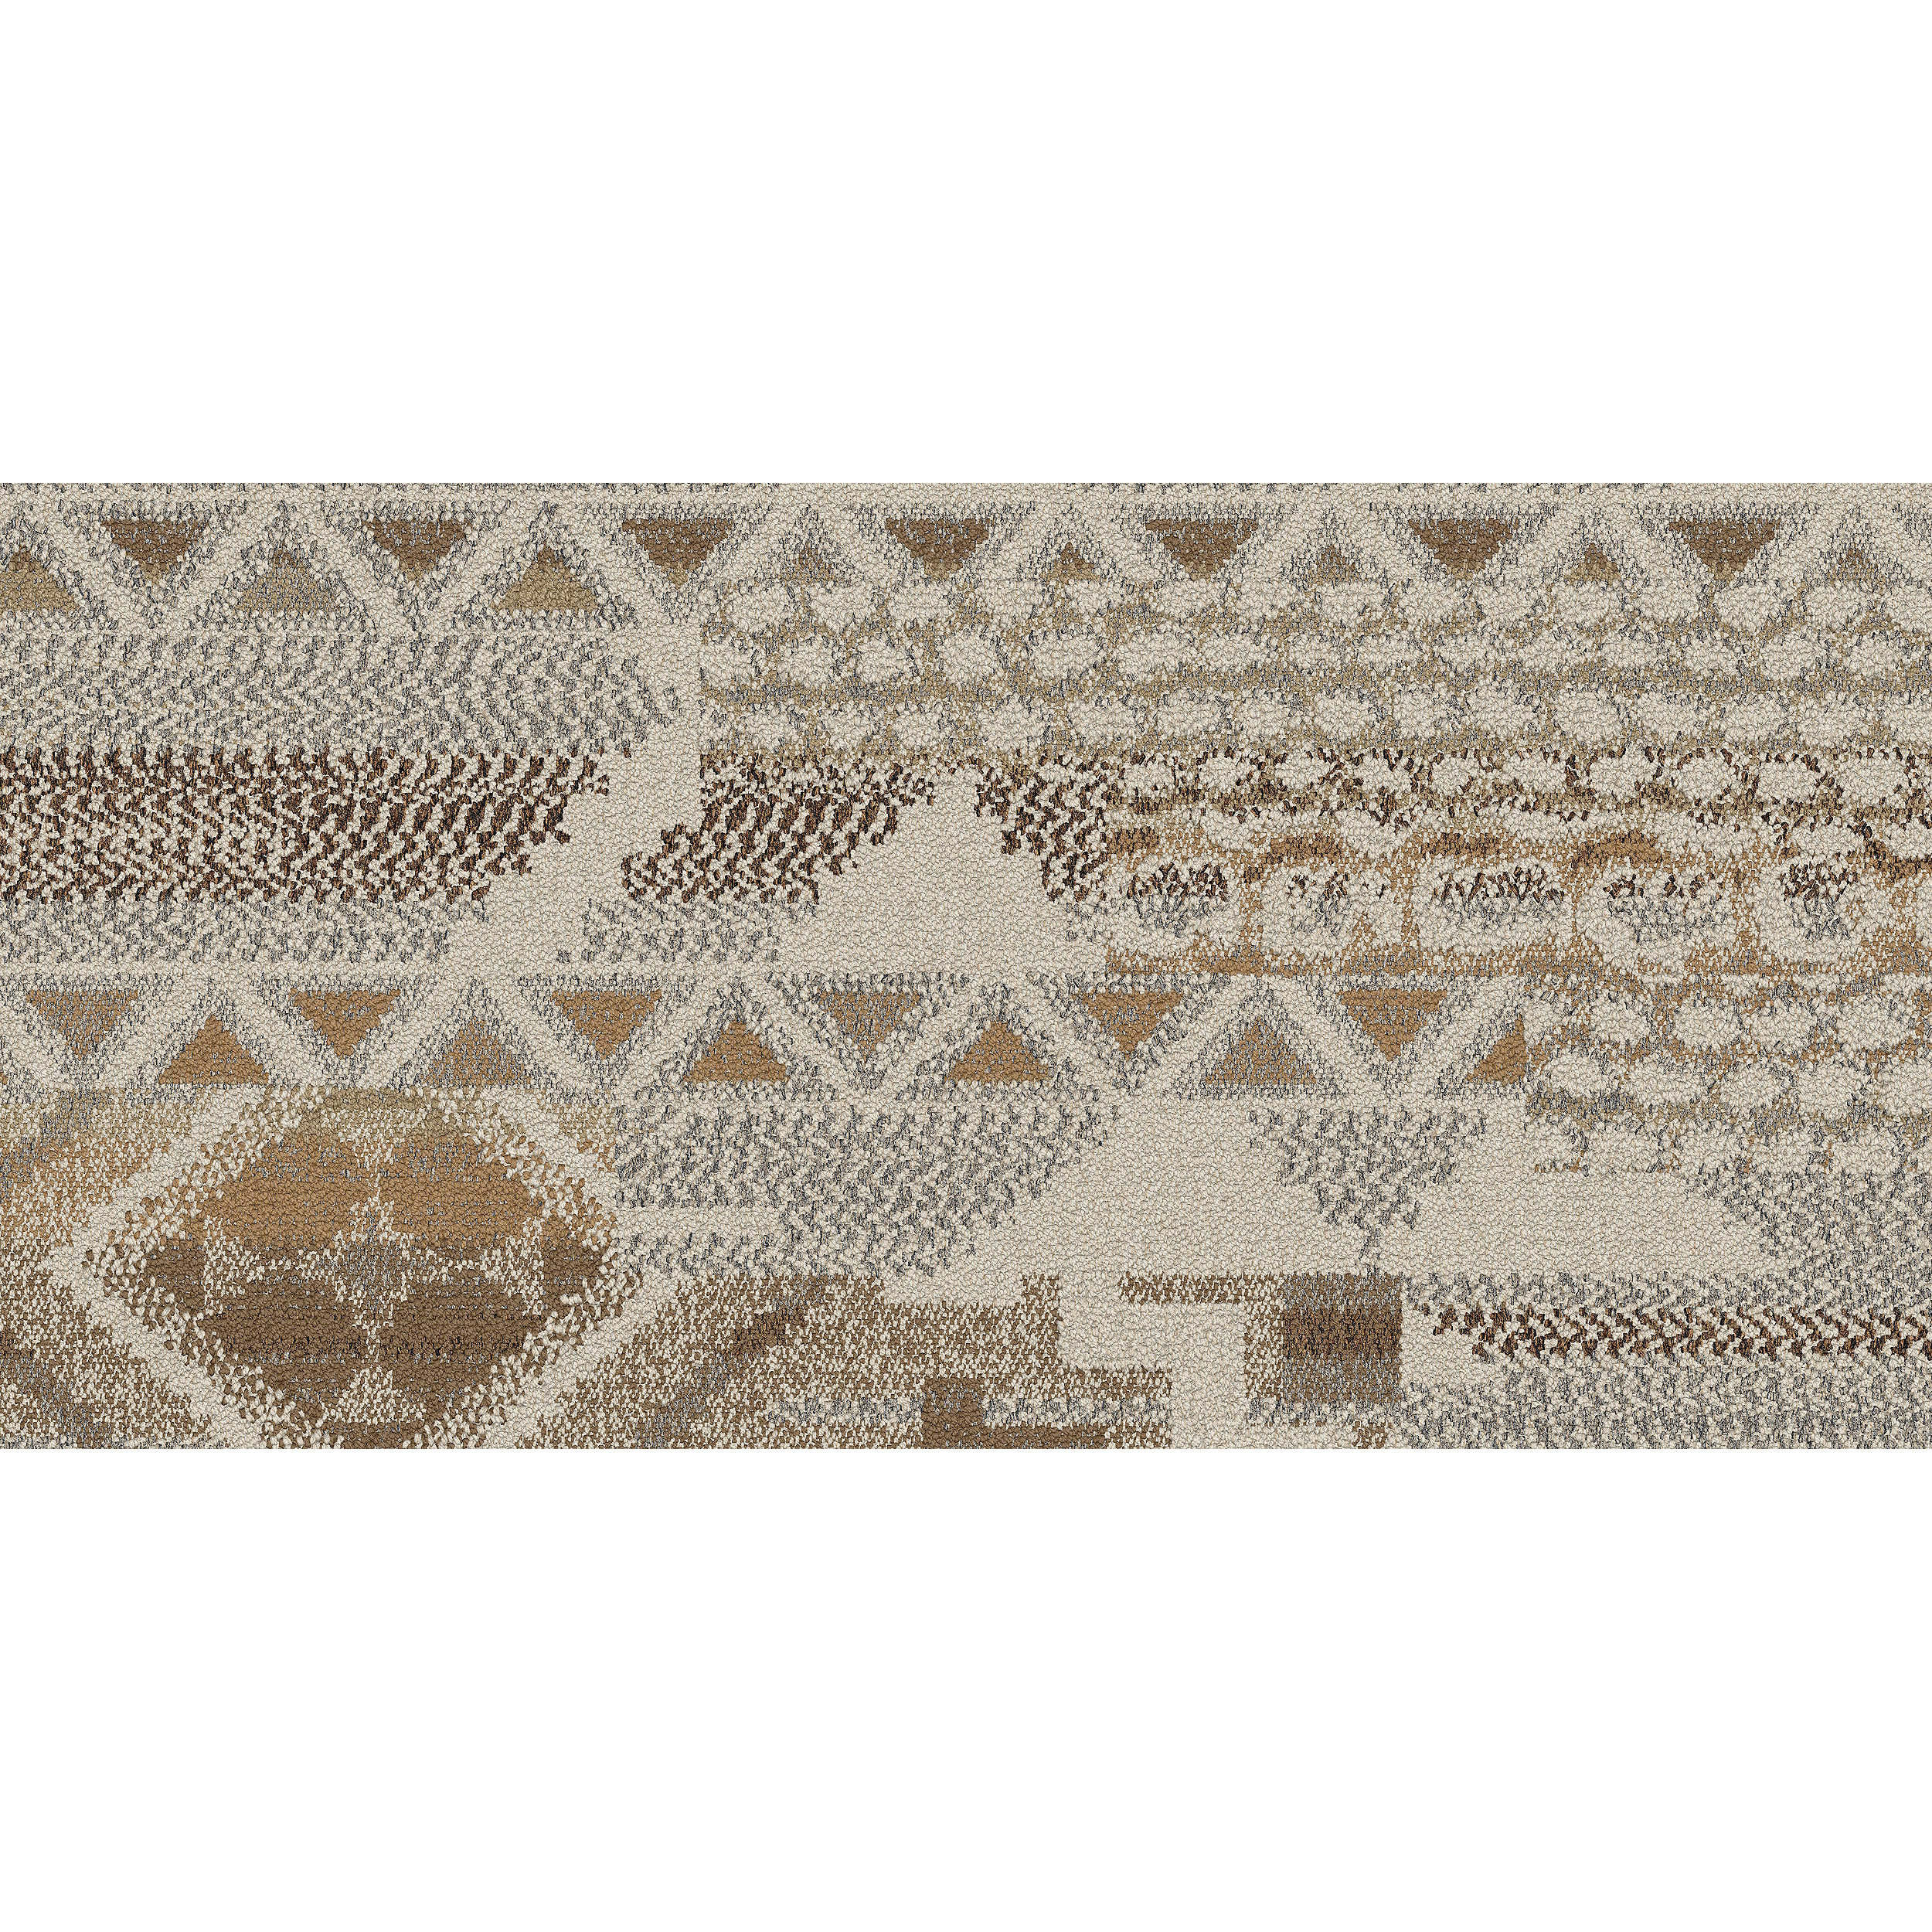 Desert Ranch Carpet Tile in Sandstone numéro d’image 10